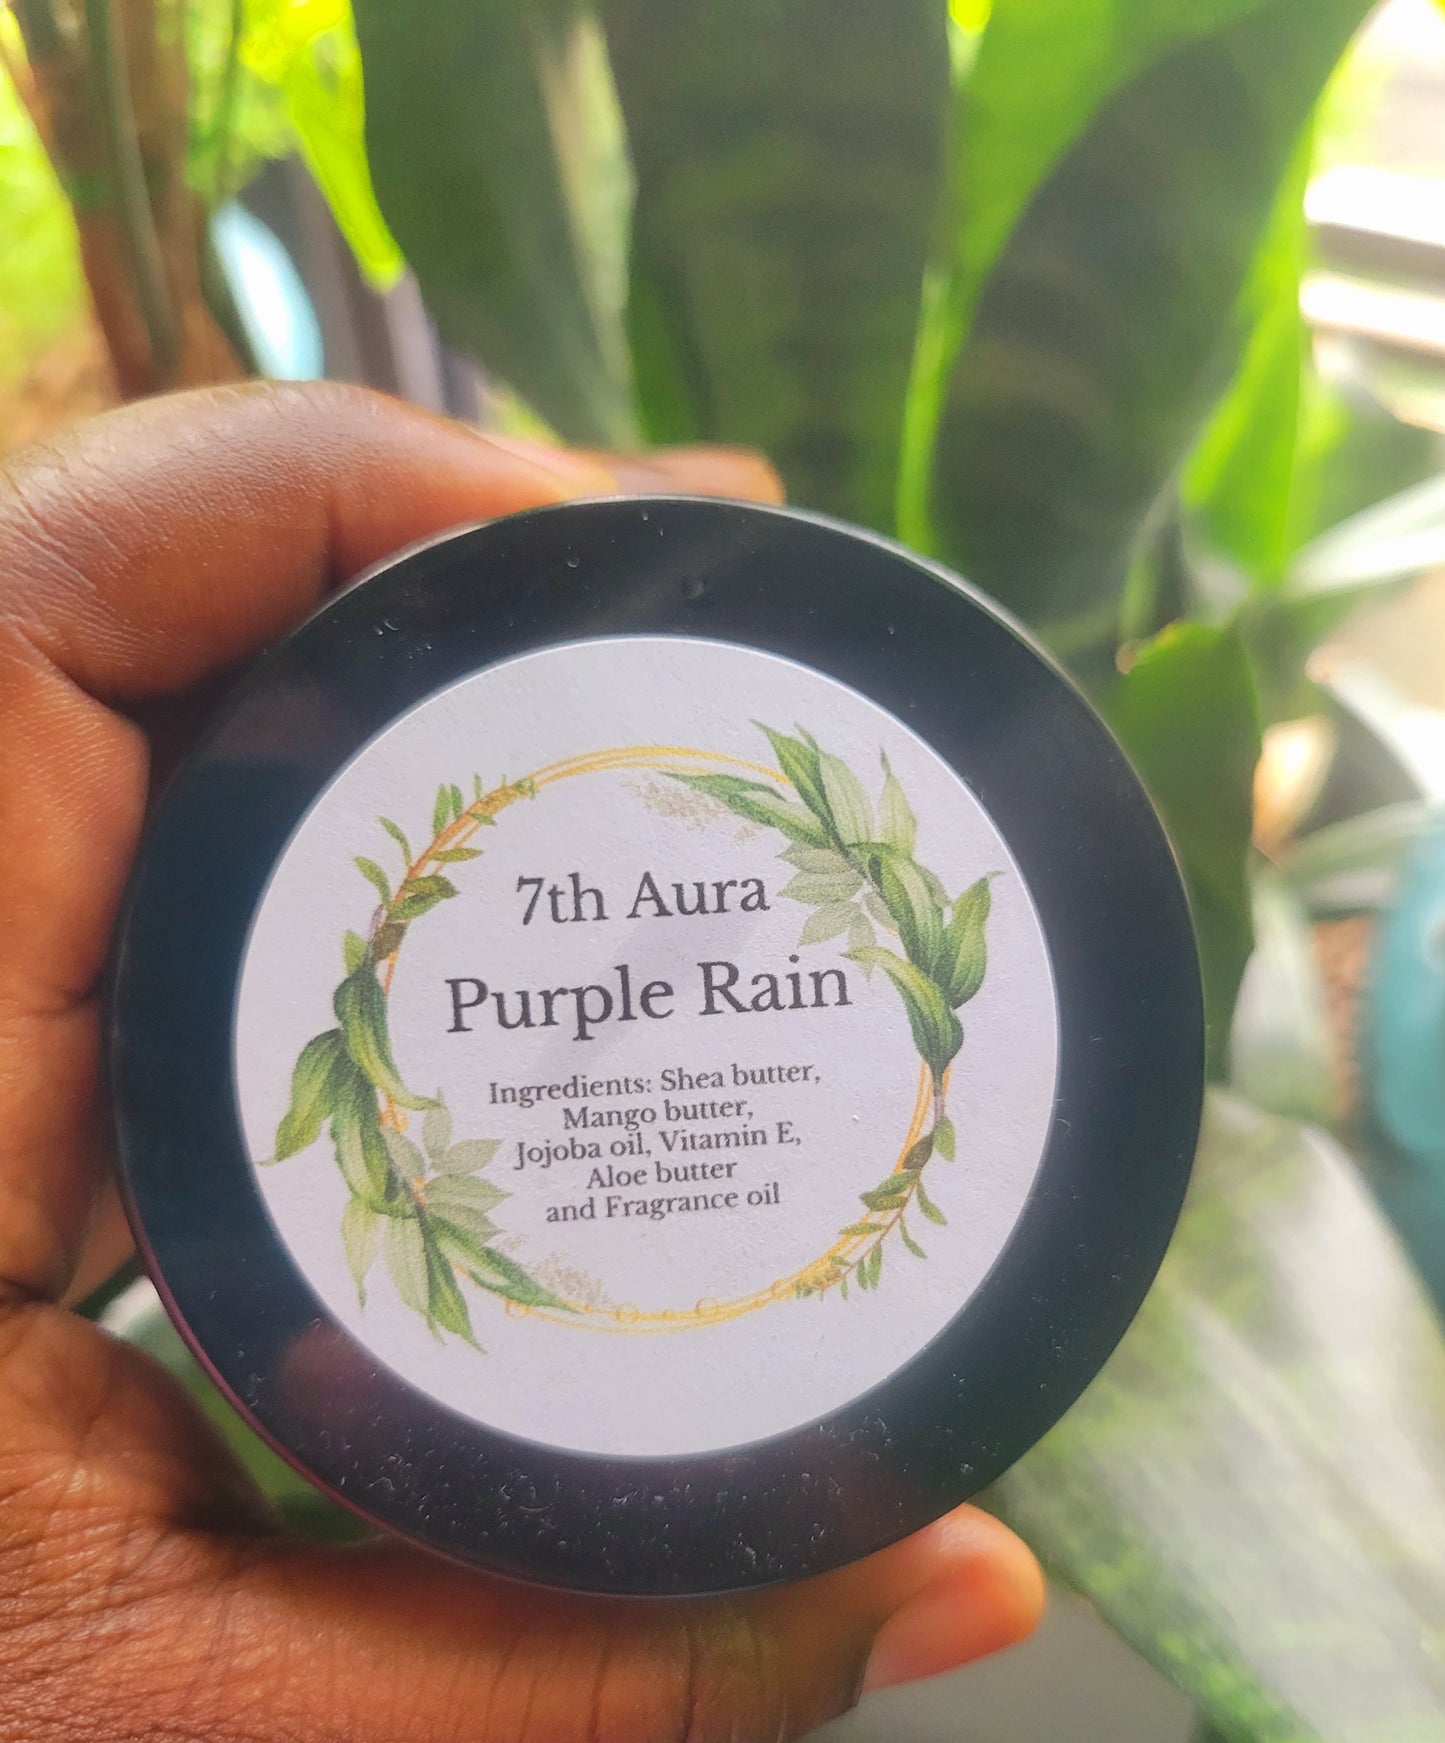 Purple Rain body butter and fragrance oil